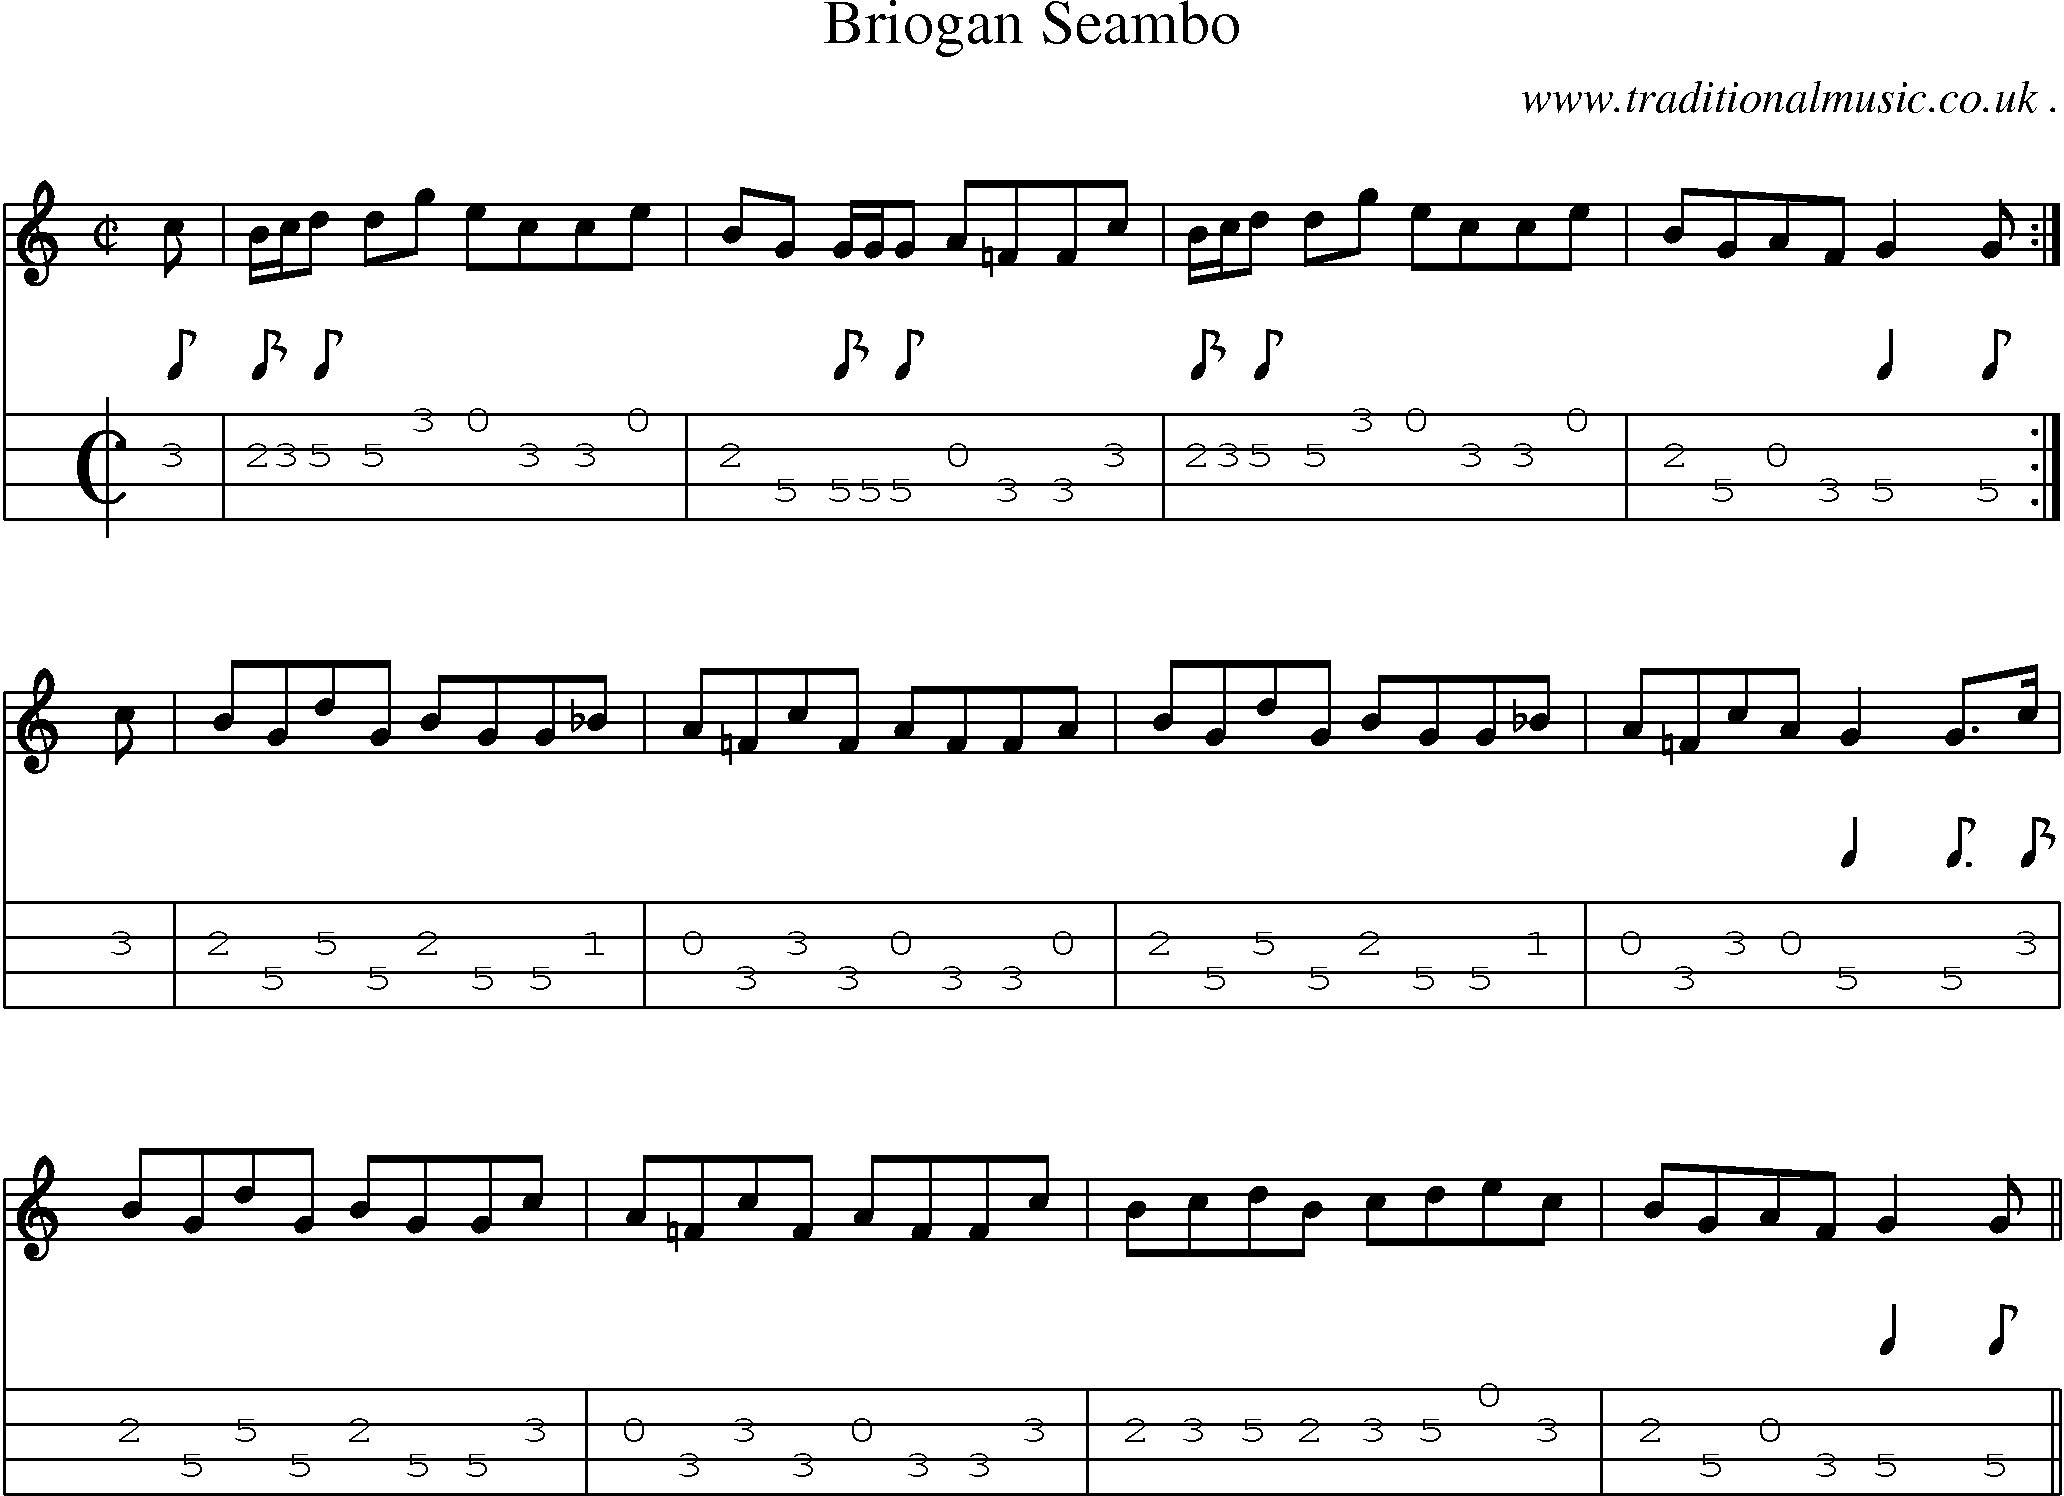 Sheet-music  score, Chords and Mandolin Tabs for Briogan Seambo